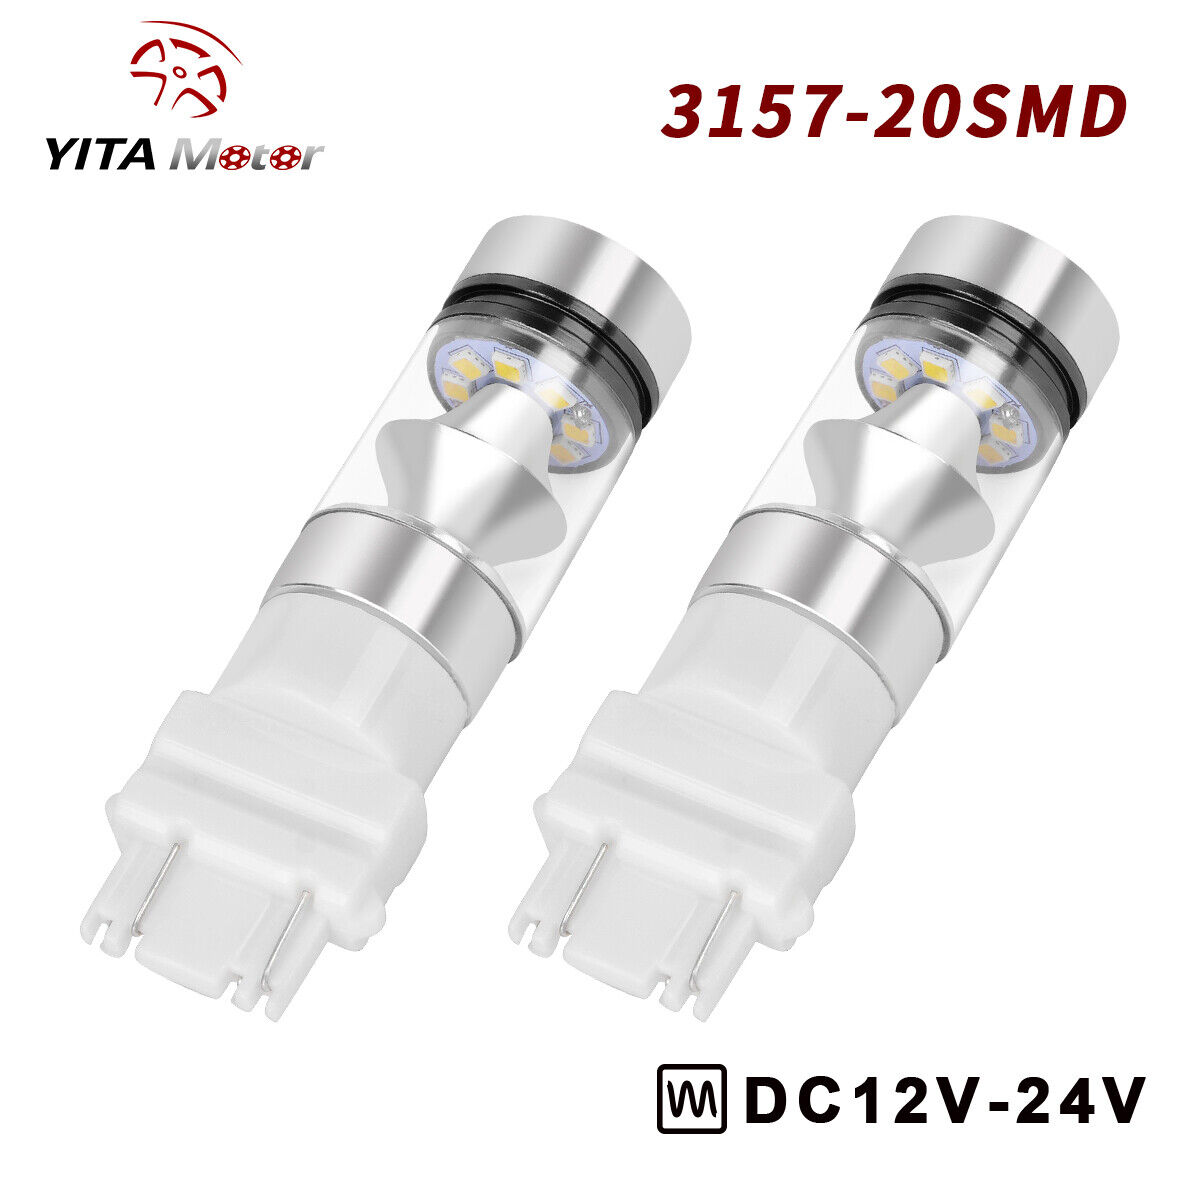 YITAMOTOR 2x 3157 3156 White 100W 20SMD Backup Reverse Parking LED Light Bulbs